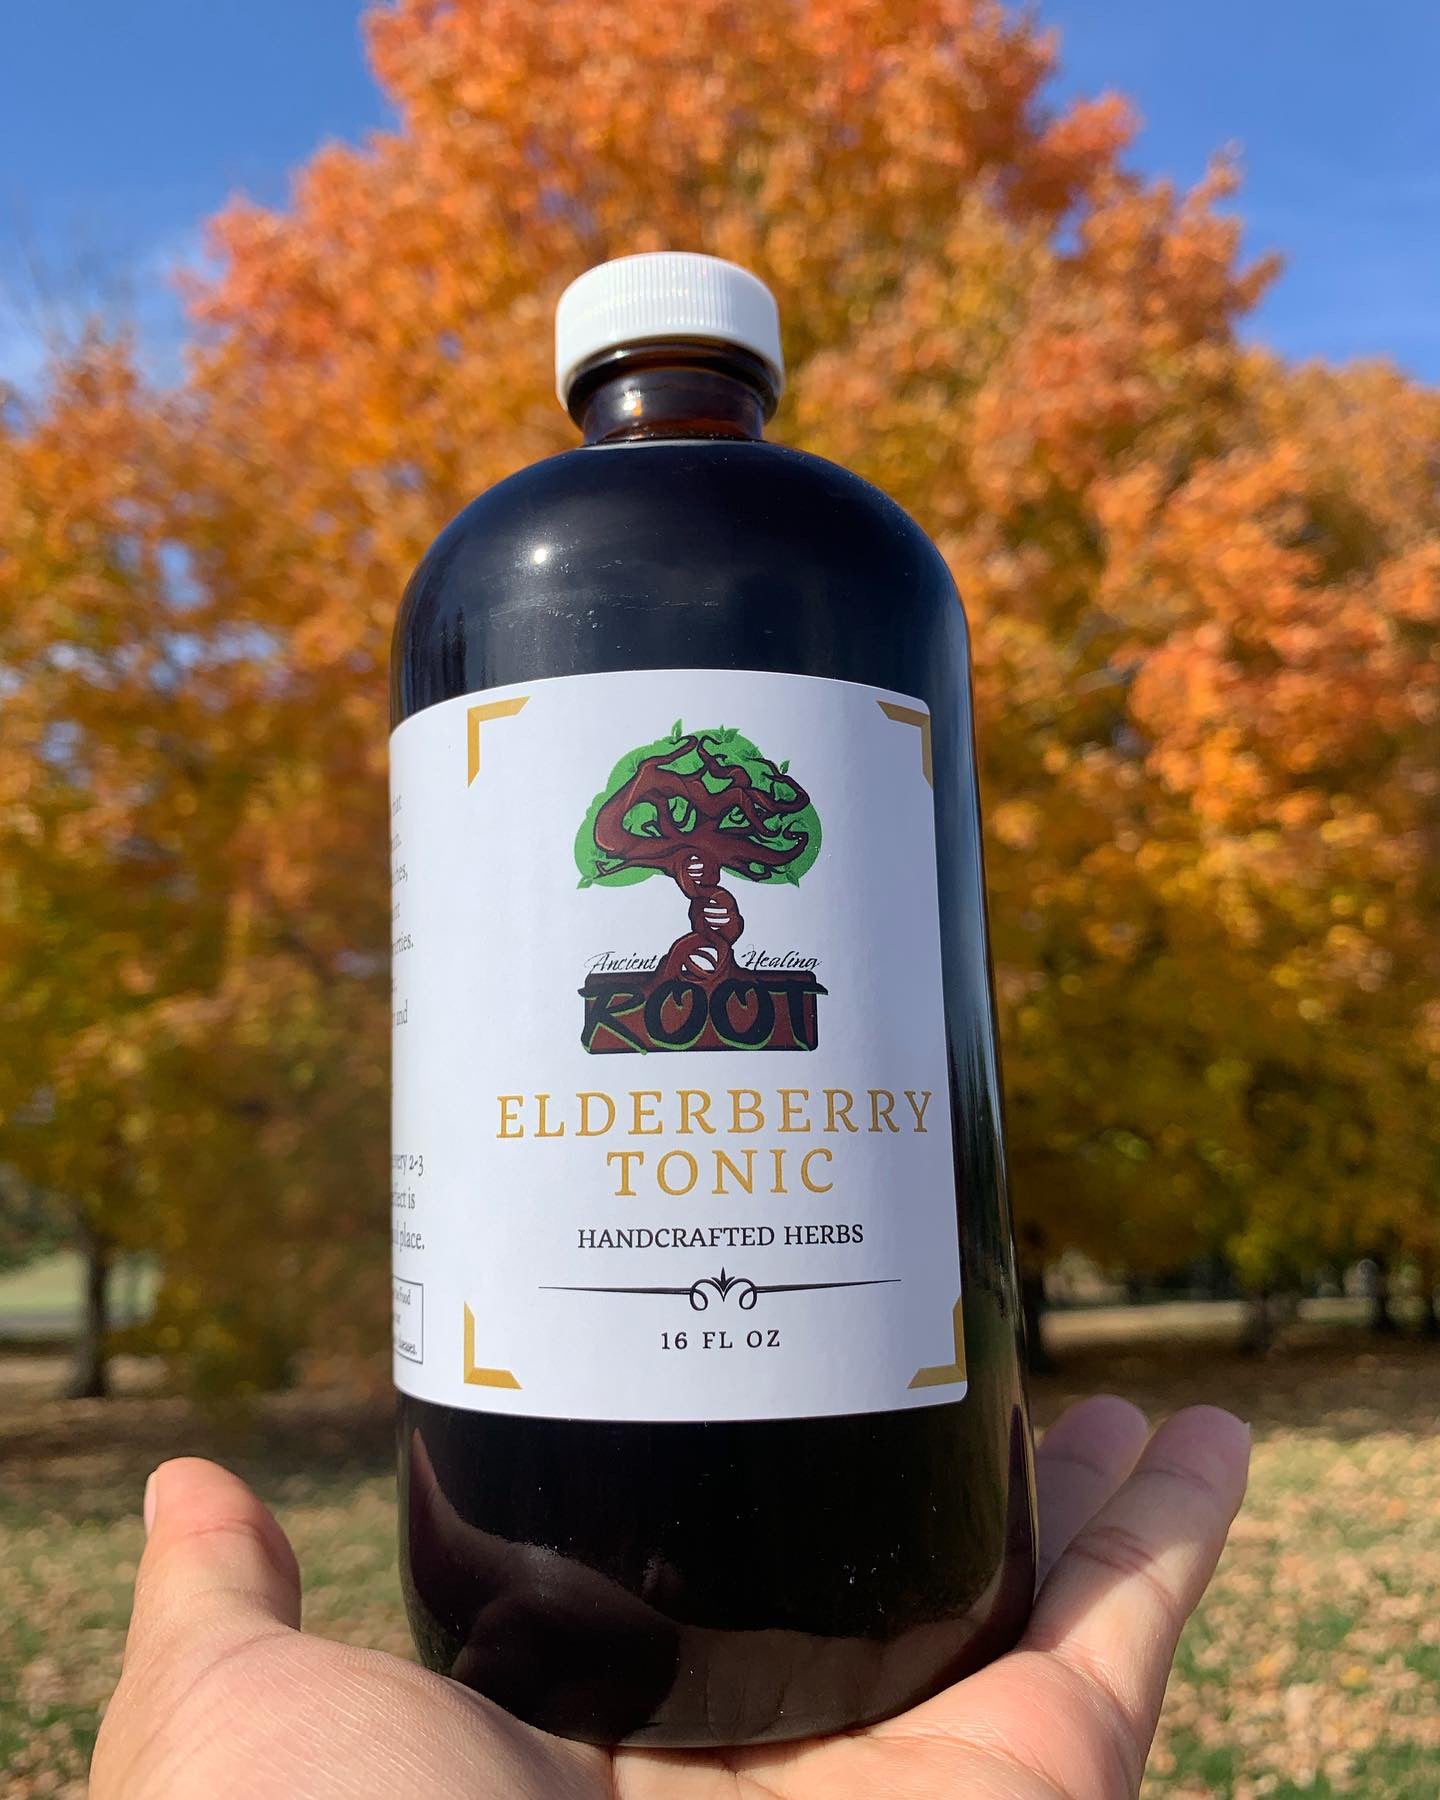 Elderberry syrup tonic